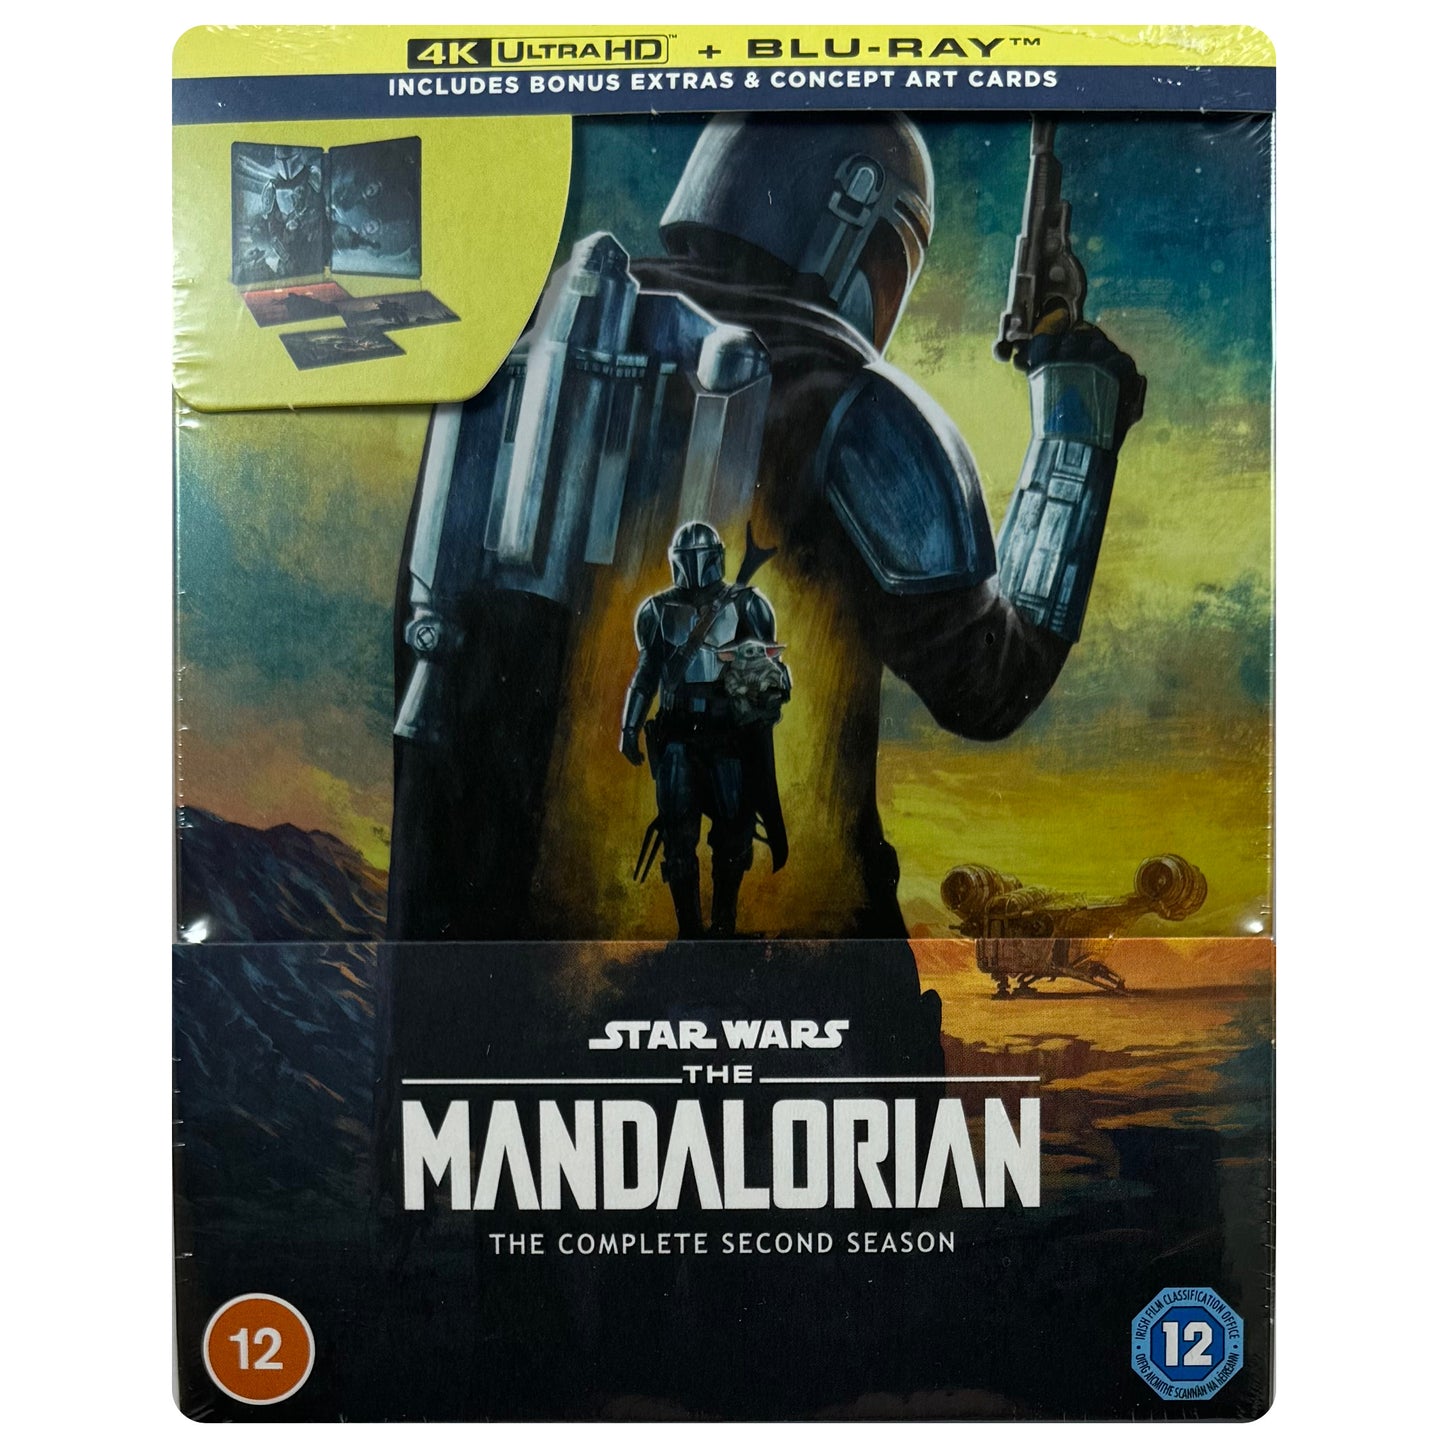 The Mandalorian Season 2 4K Steelbook - Collector's Edition